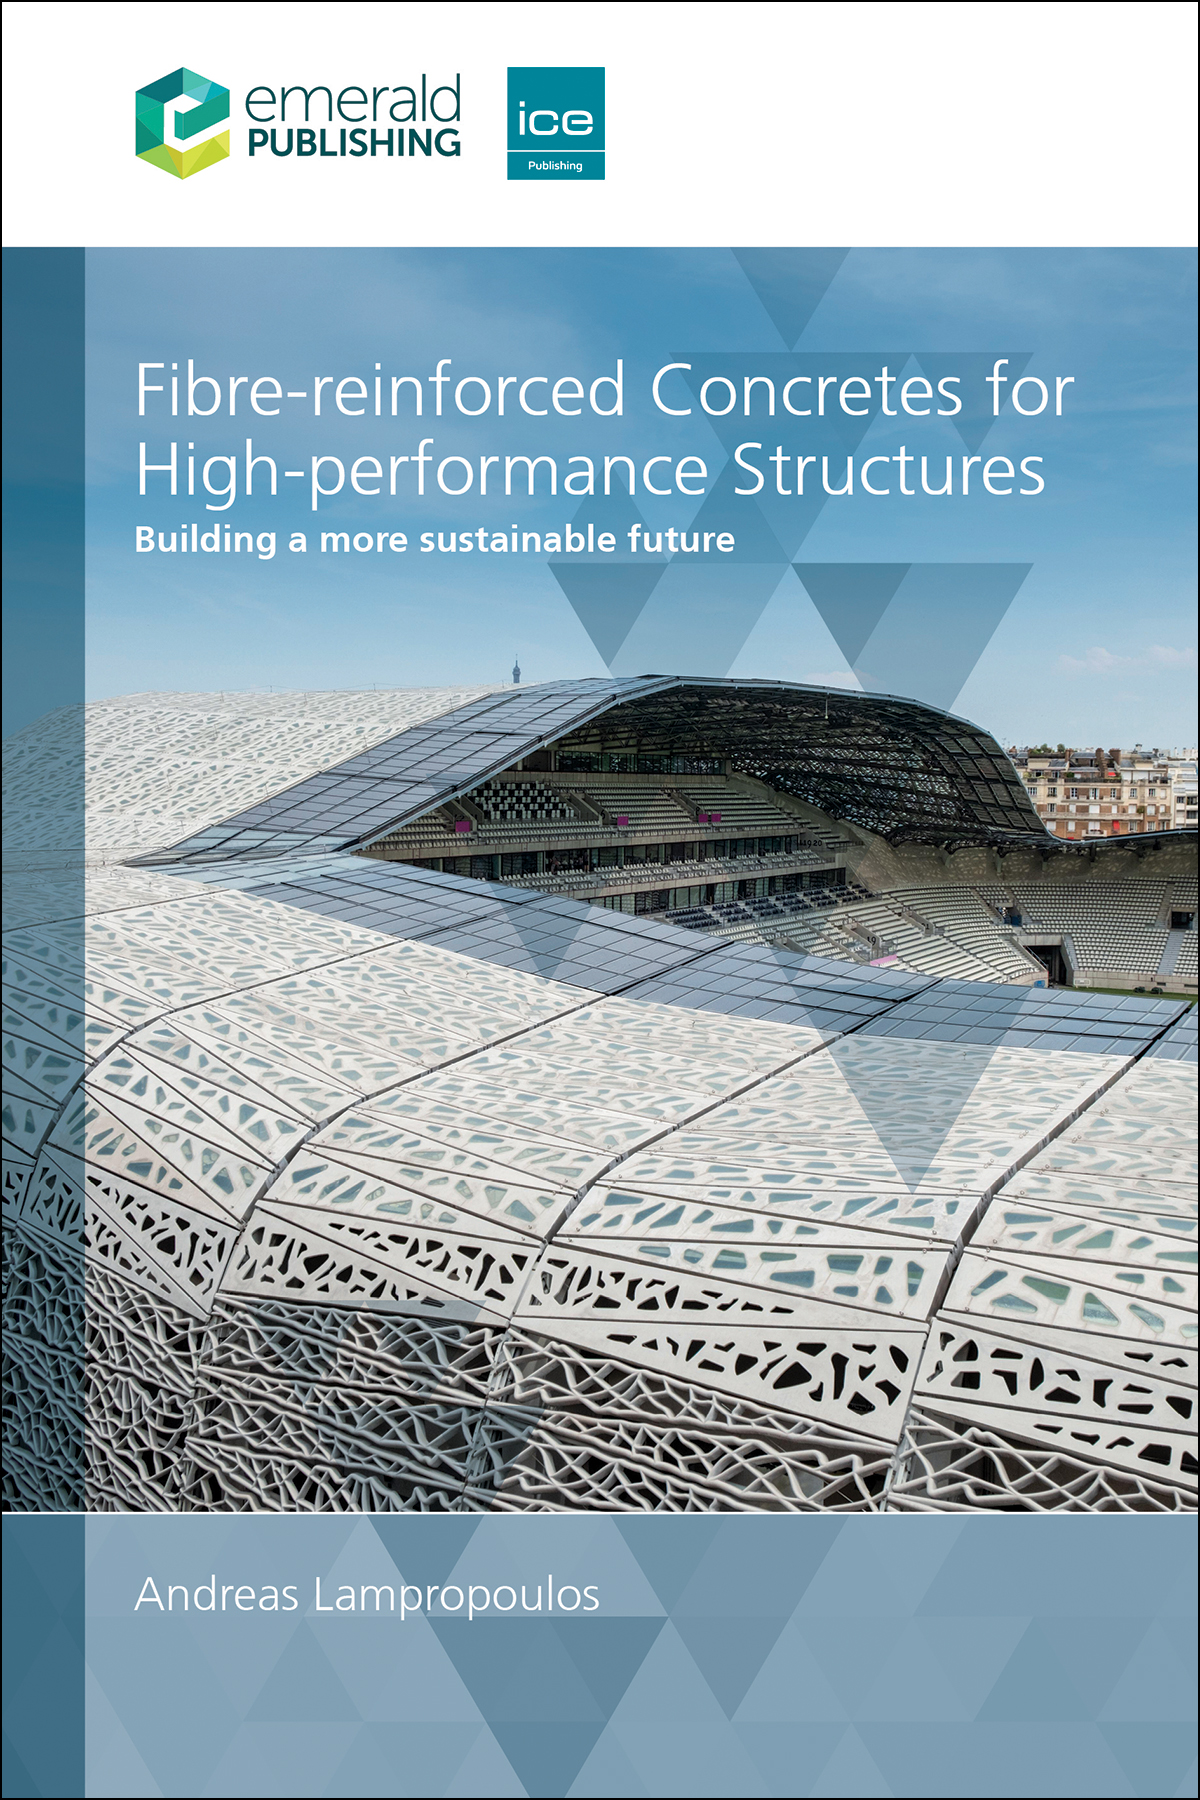 Fibre-reinforced Concretes for High Performance Structures